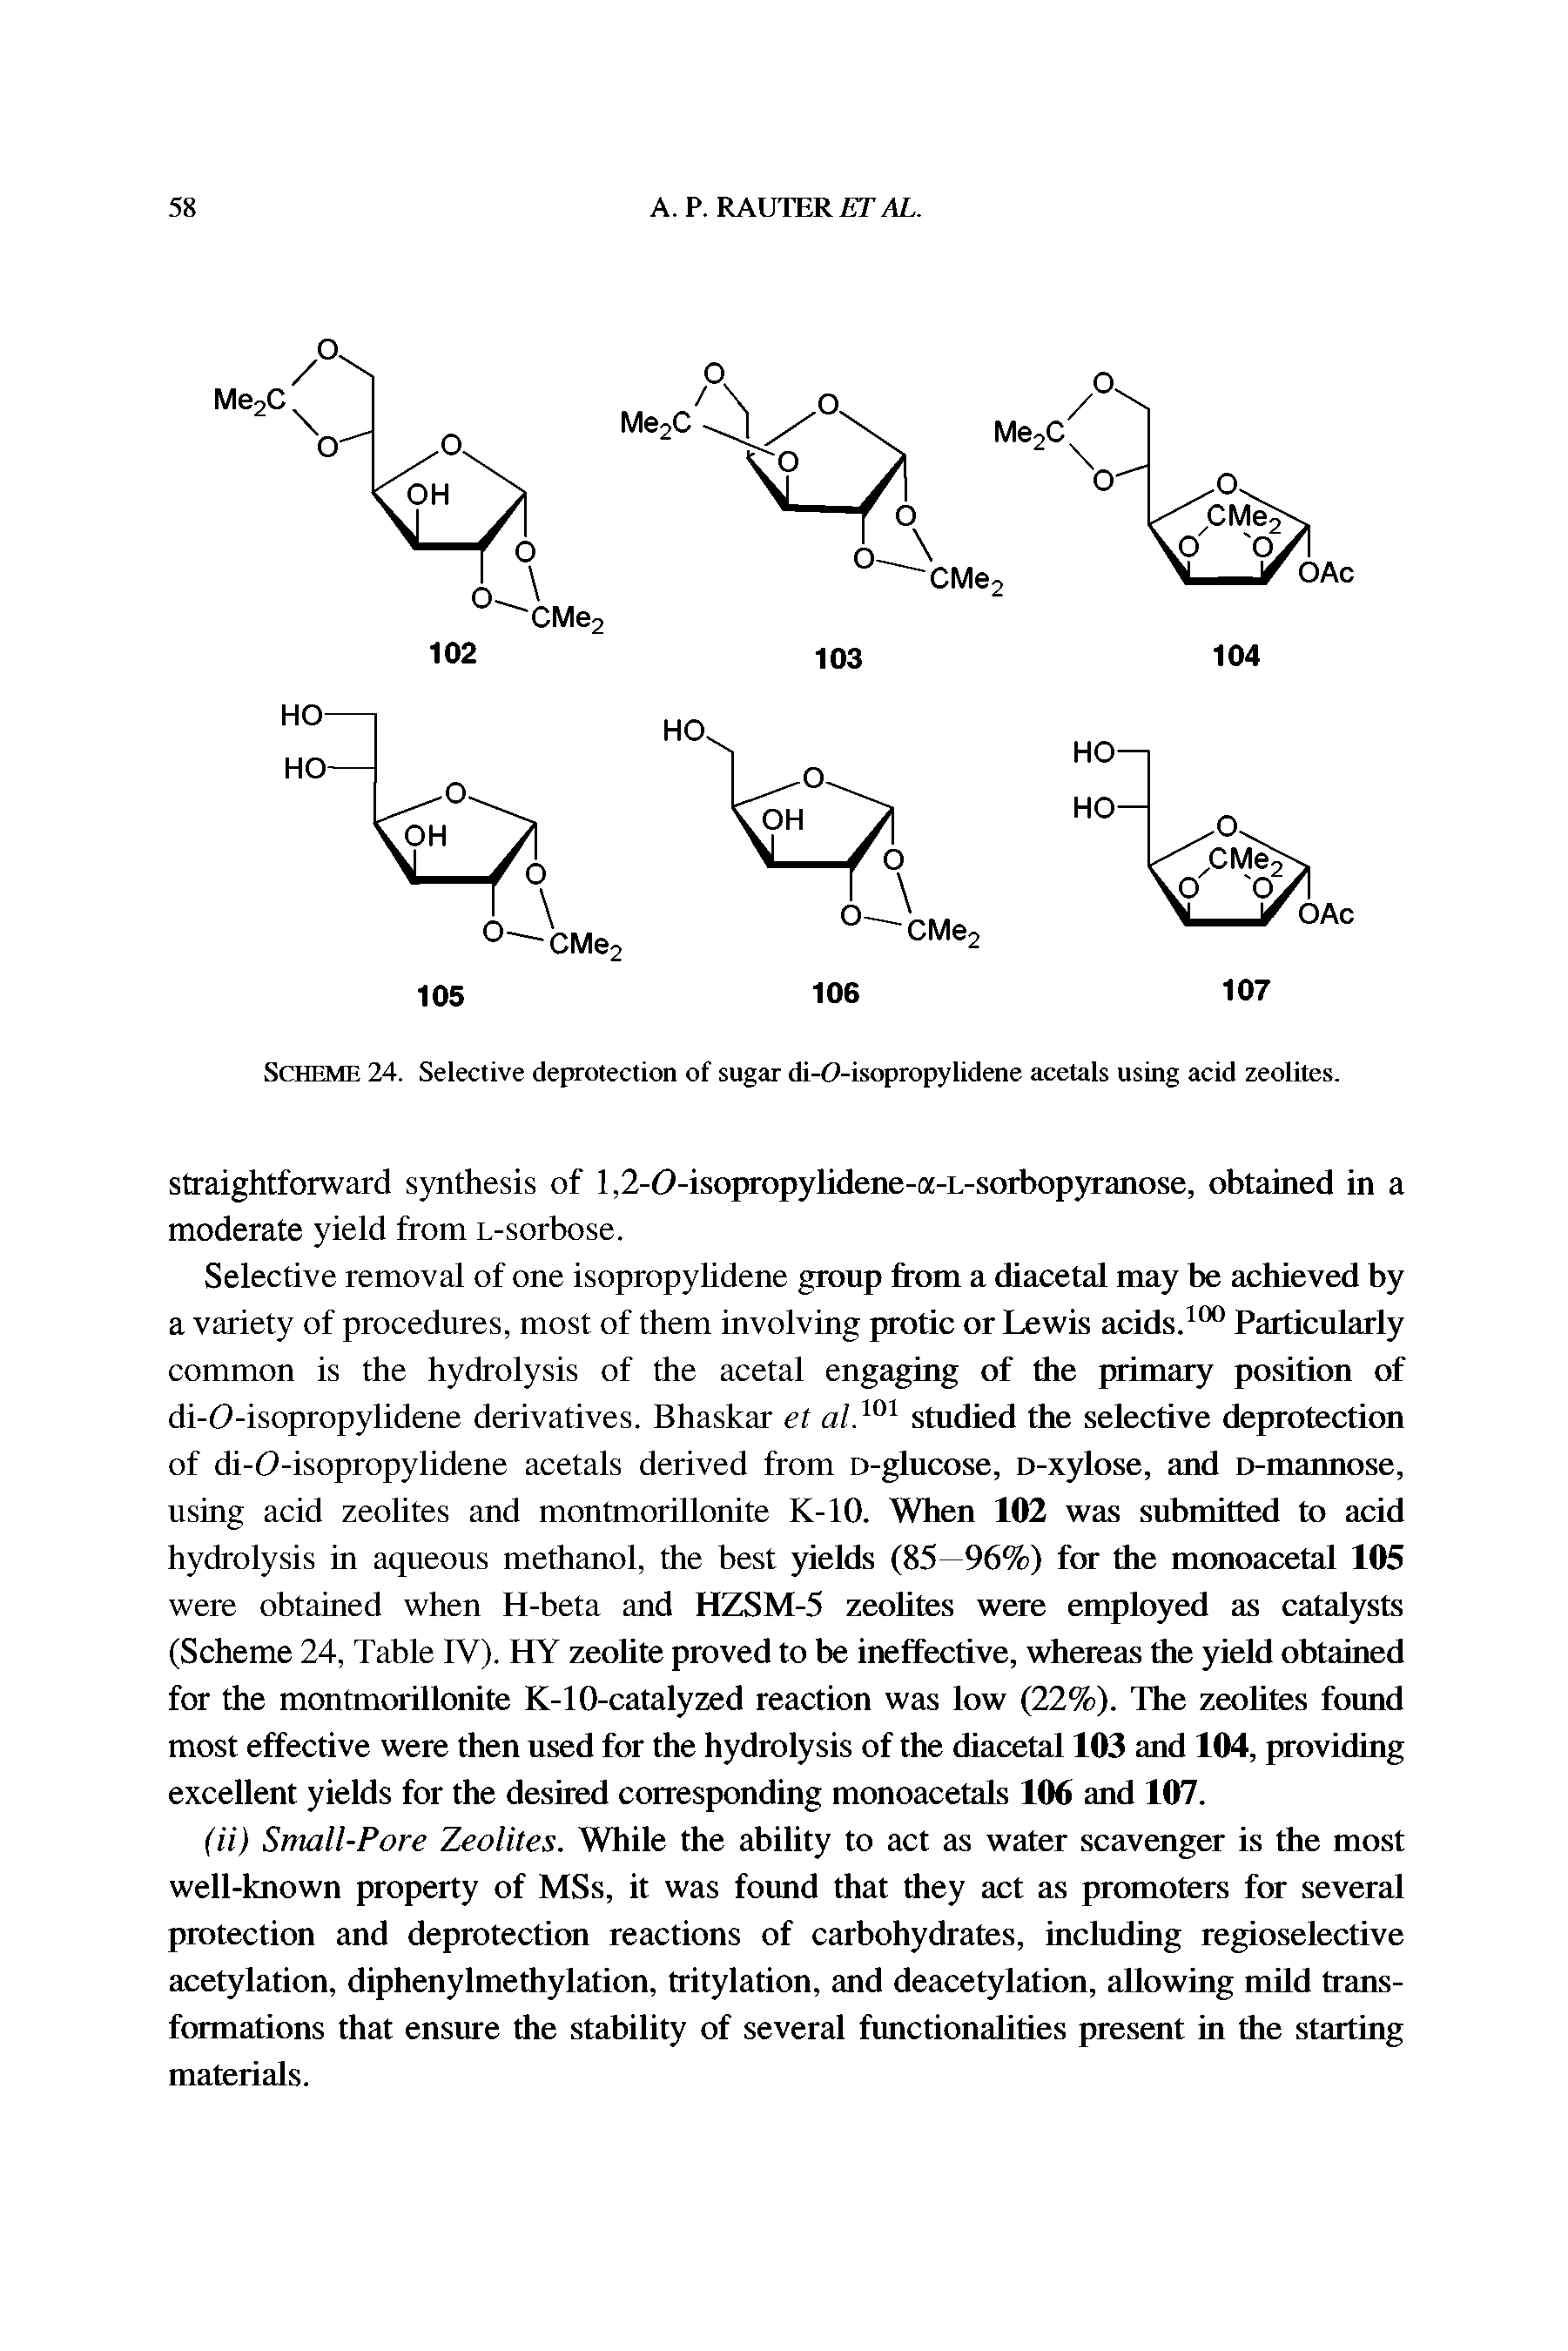 Scheme 24. Selective deprotection of sugar di-O-isopropylidene acetals using acid zeolites.